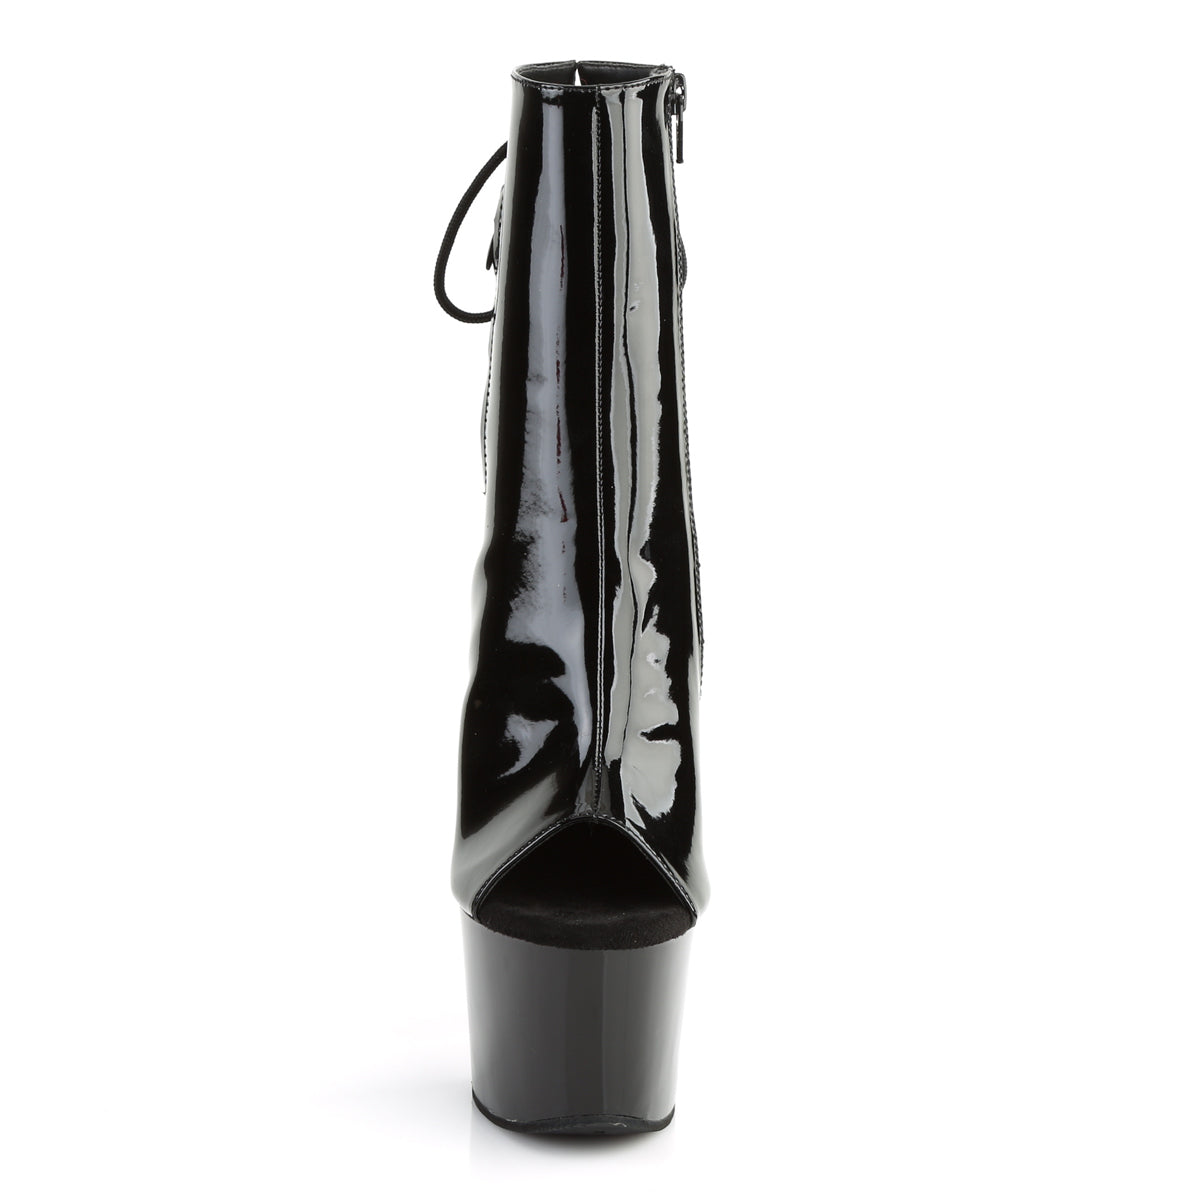 SKY-1018 Pleaser 7" Heel Black Patent Pole Dancing Platforms-Pleaser- Sexy Shoes Alternative Footwear